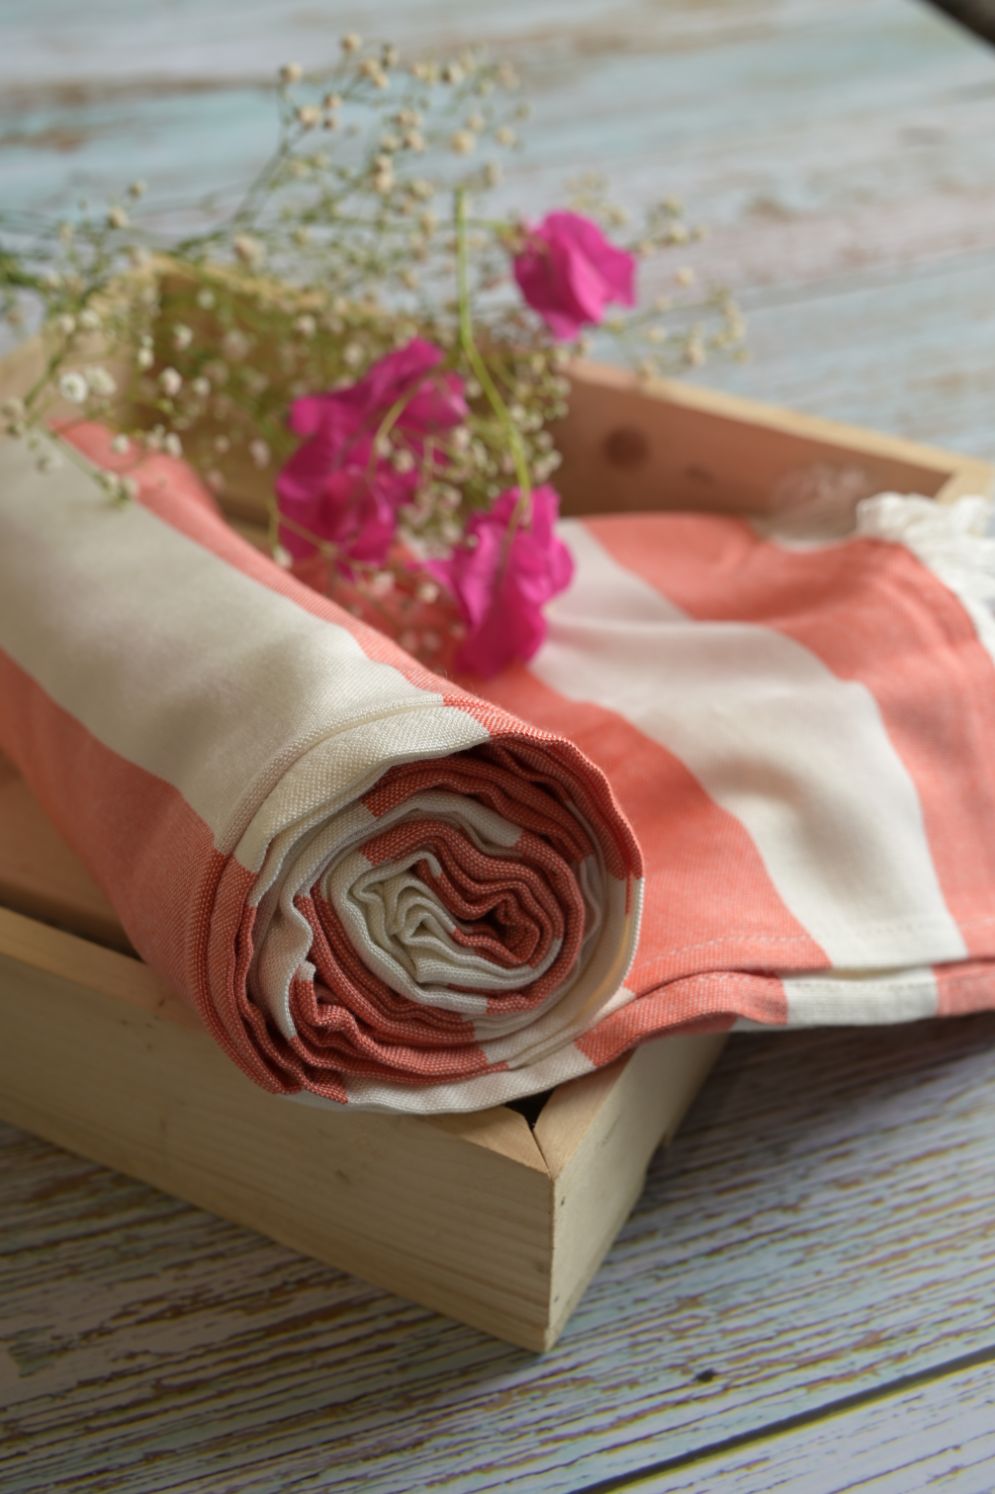 Thin Bamboo Bath Towel - Cotton Candy 160*90cm